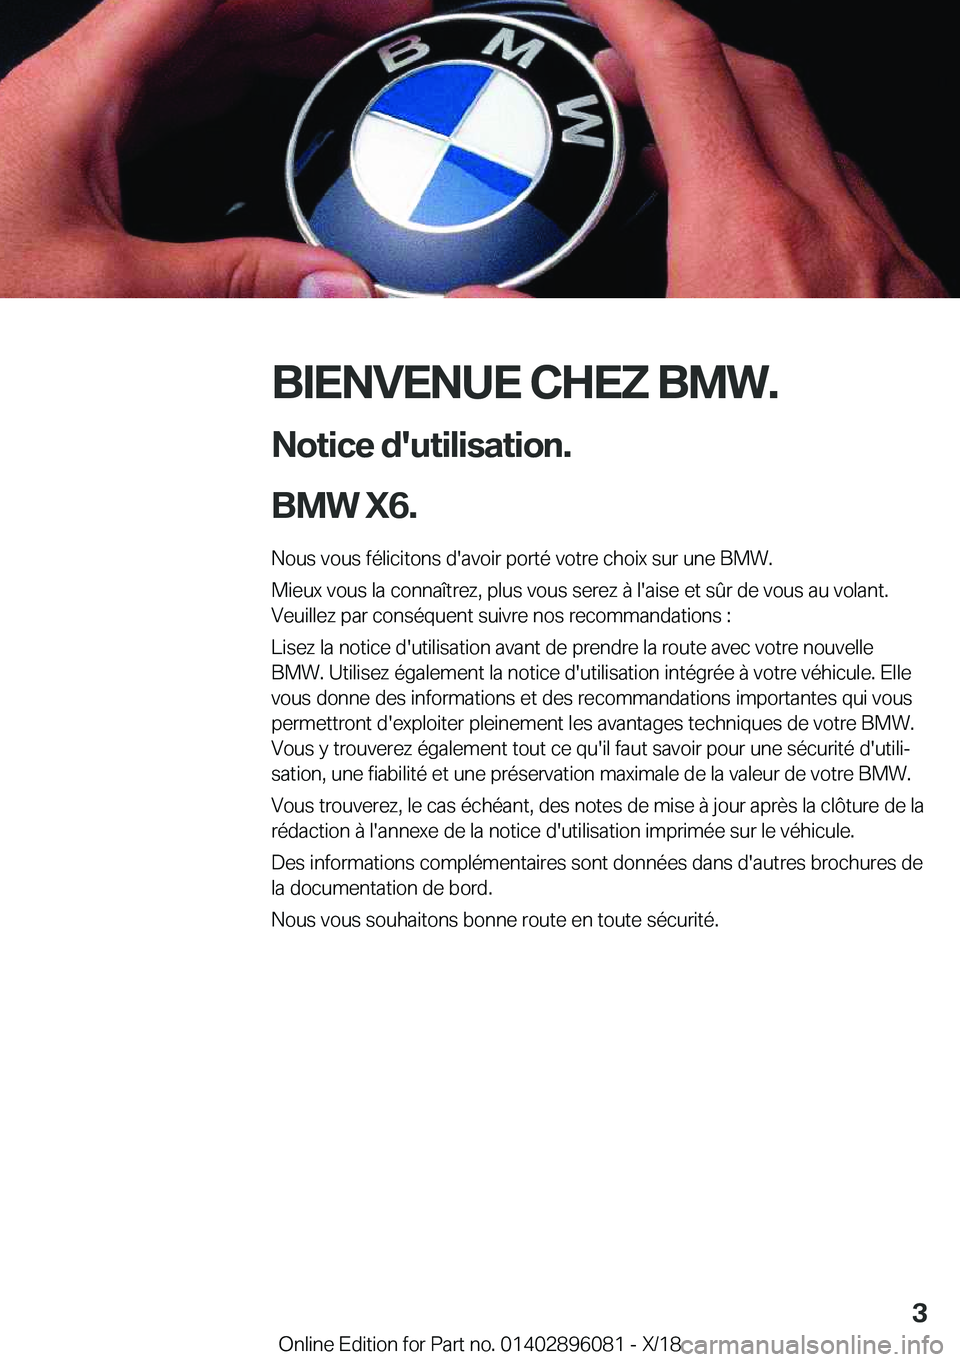 BMW X6 2019  Notices Demploi (in French) �B�I�E�N�V�E�N�U�E��C�H�E�Z��B�M�W�.�N�o�t�i�c�e��d�'�u�t�i�l�i�s�a�t�i�o�n�.
�B�M�W��X�6�. �N�o�u�s��v�o�u�s��f�é�l�i�c�i�t�o�n�s��d�'�a�v�o�i�r��p�o�r�t�é��v�o�t�r�e��c�h�o�i�x�